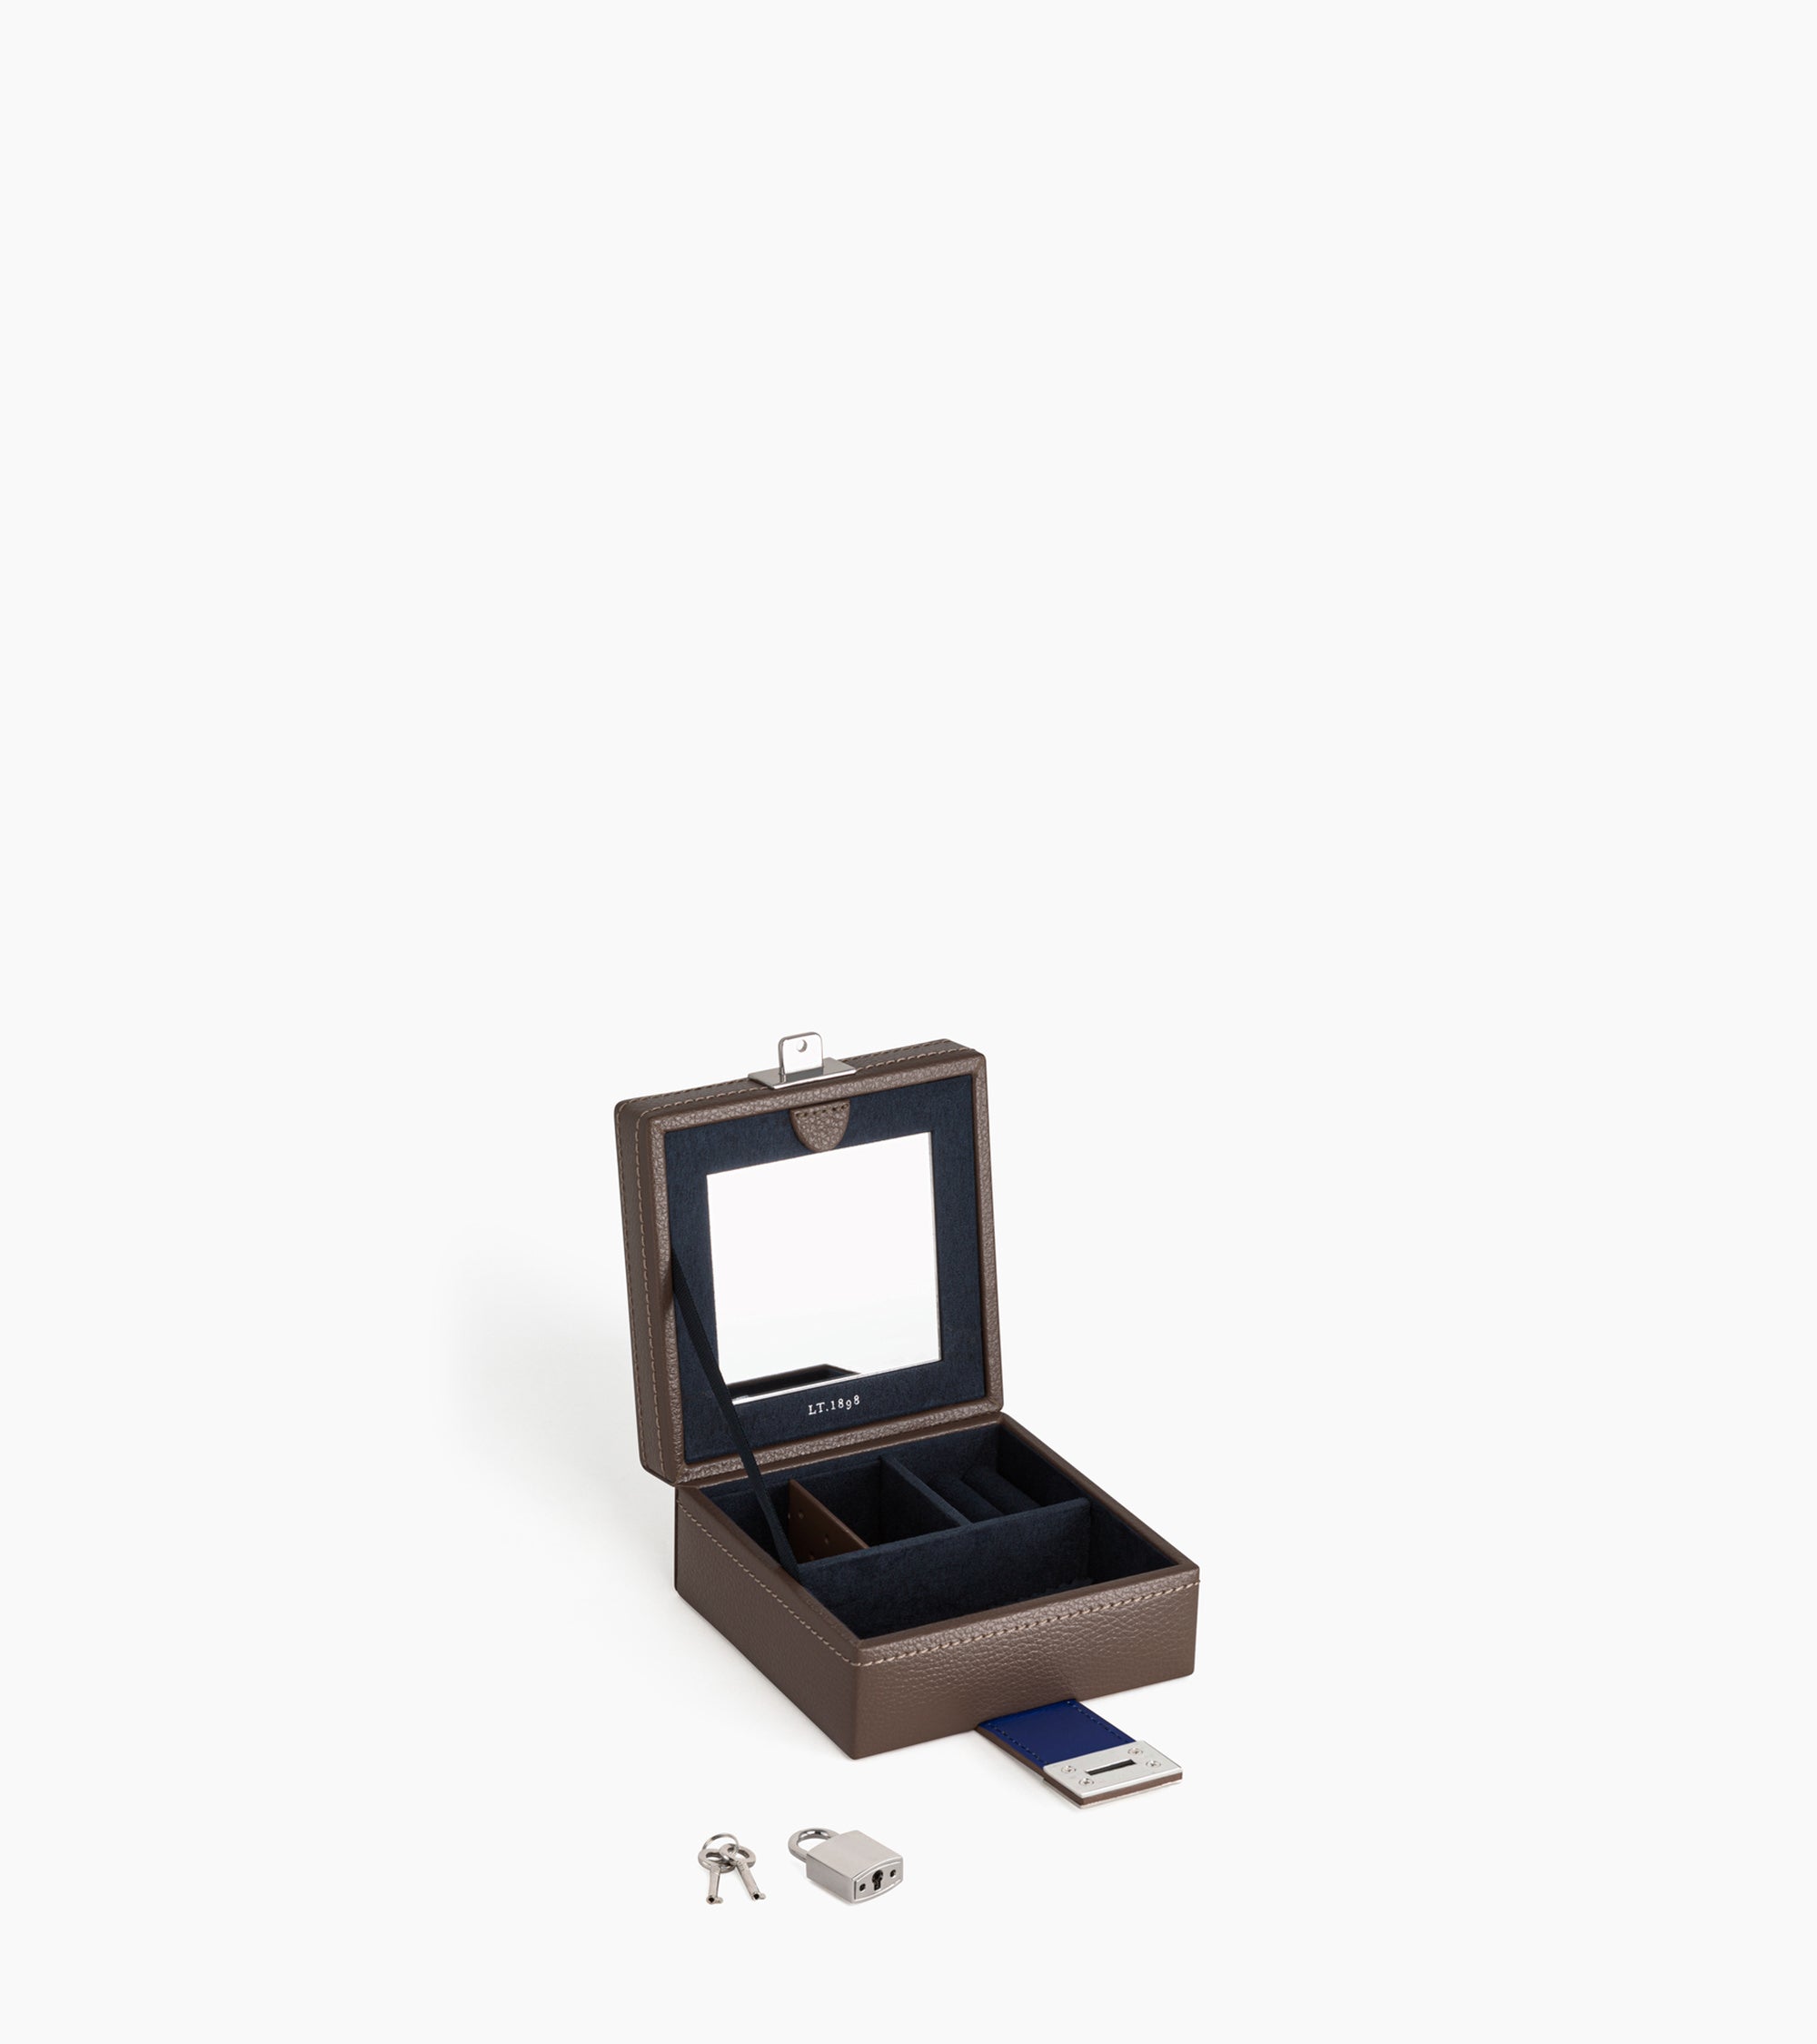 Small jewelry case